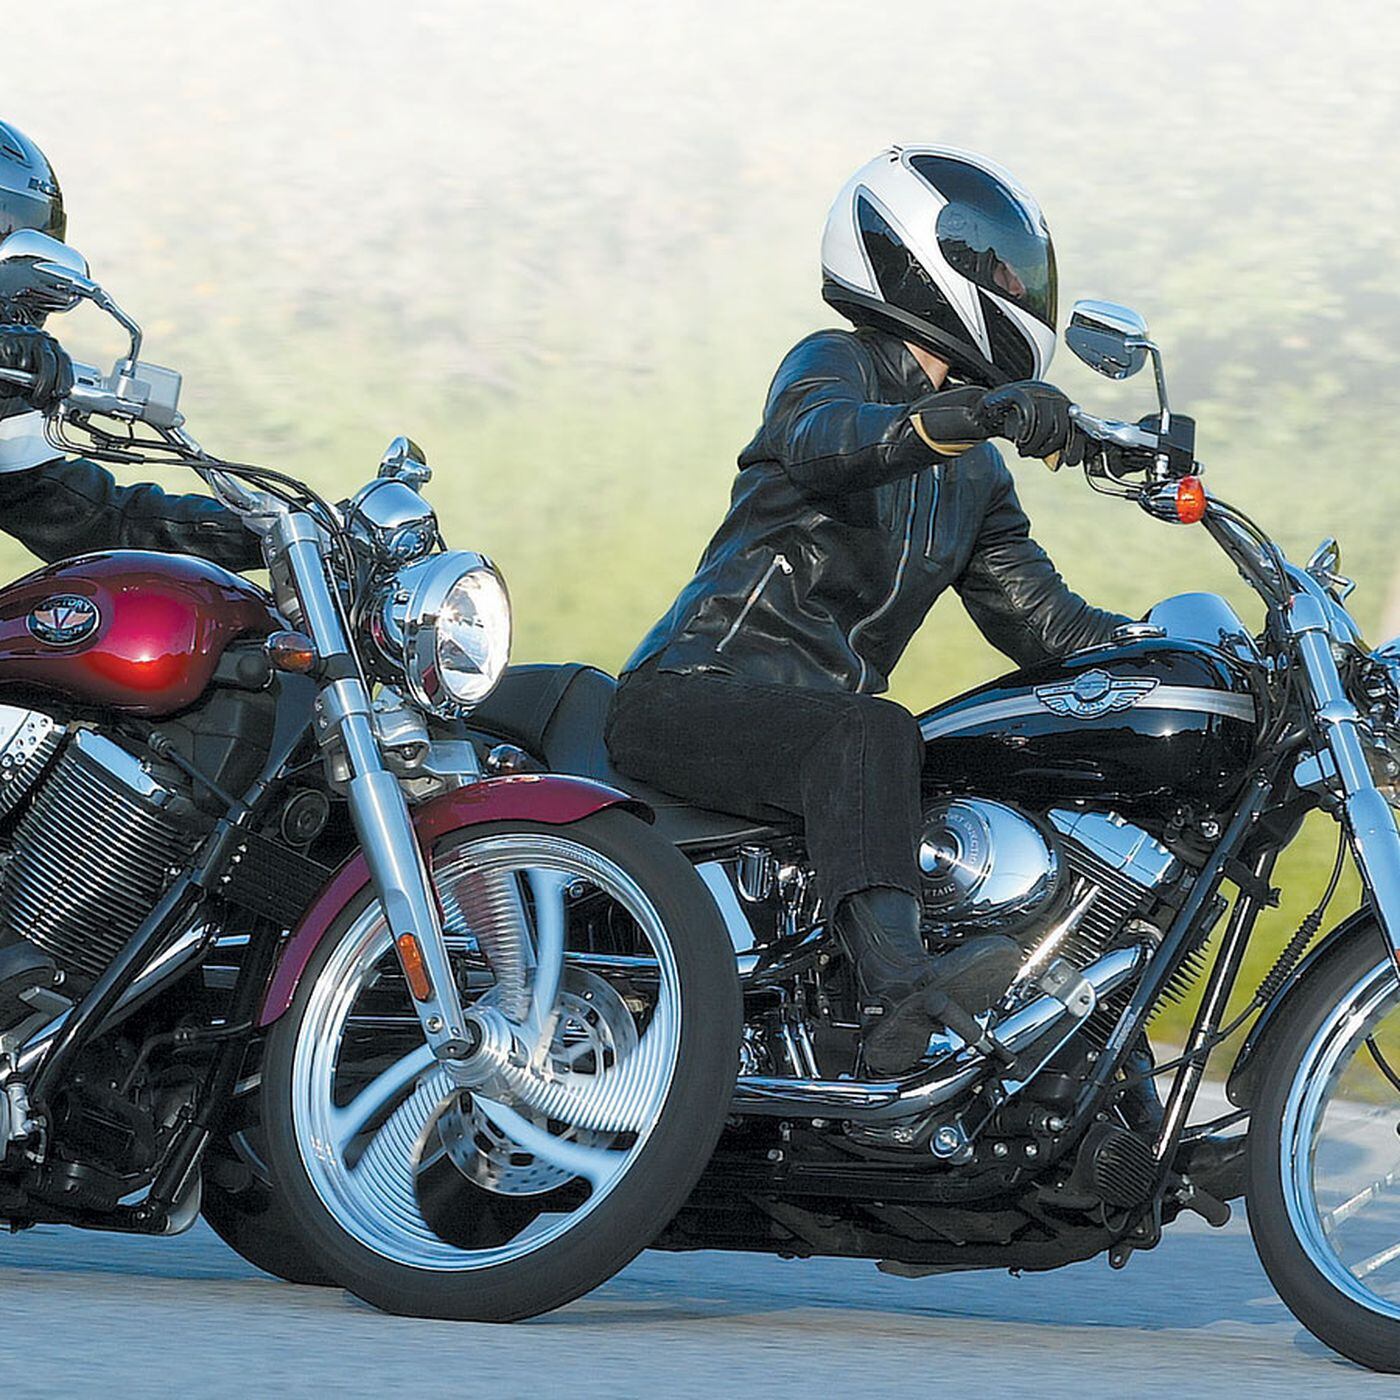 Motorcycle Comparison Road Test Harley Davidson Softail Deuce Vs Victory Vegas Motorcycle Cruiser